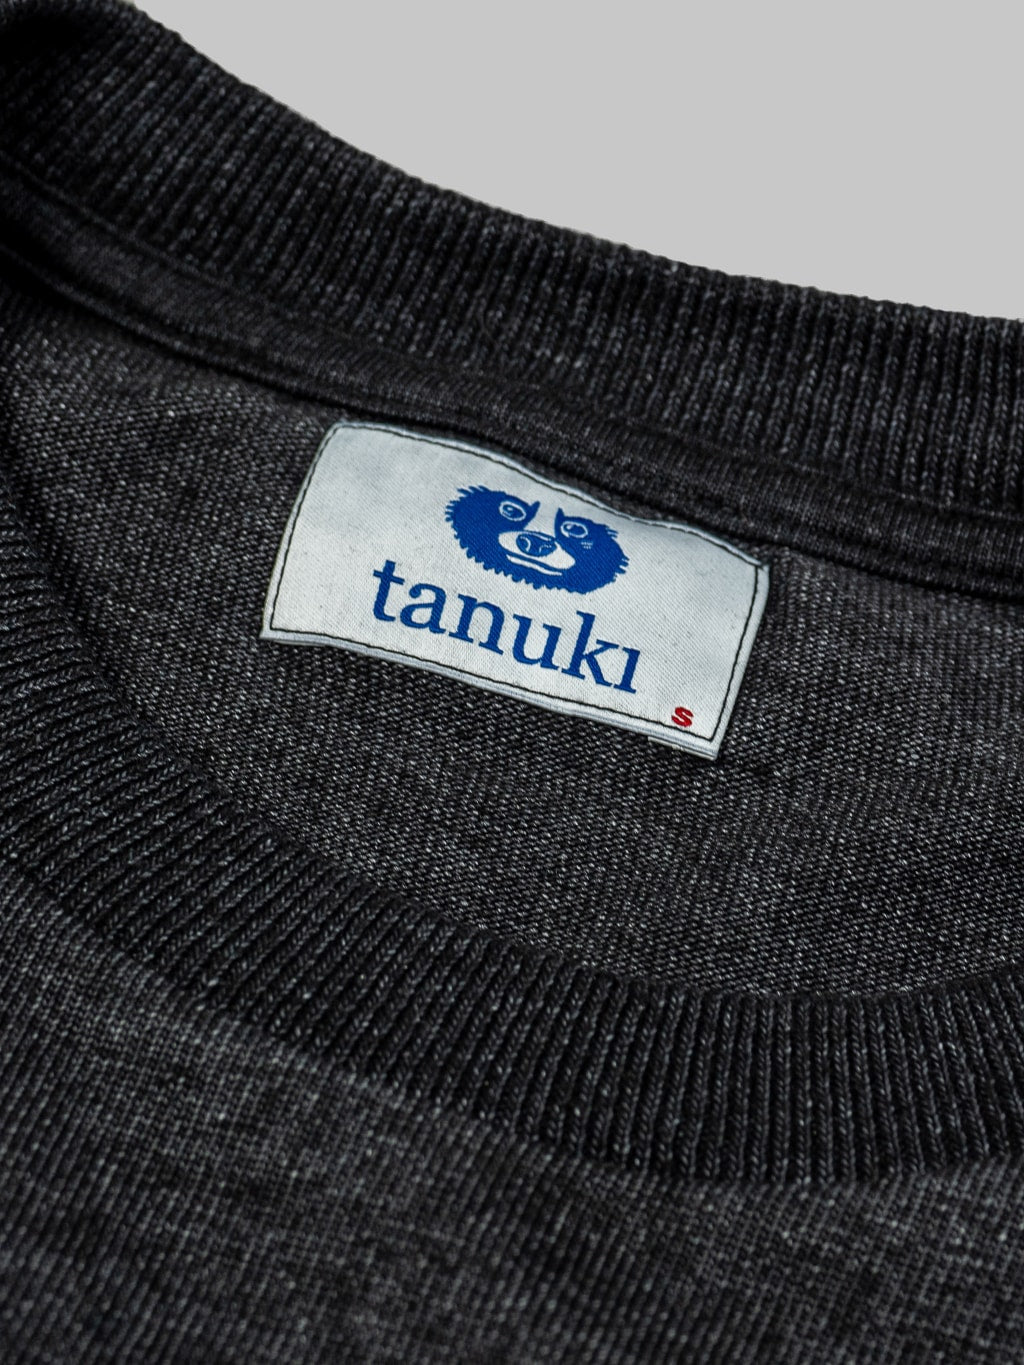 Tanuki Gyoten Heavy Black TShirt rope dyed interior label